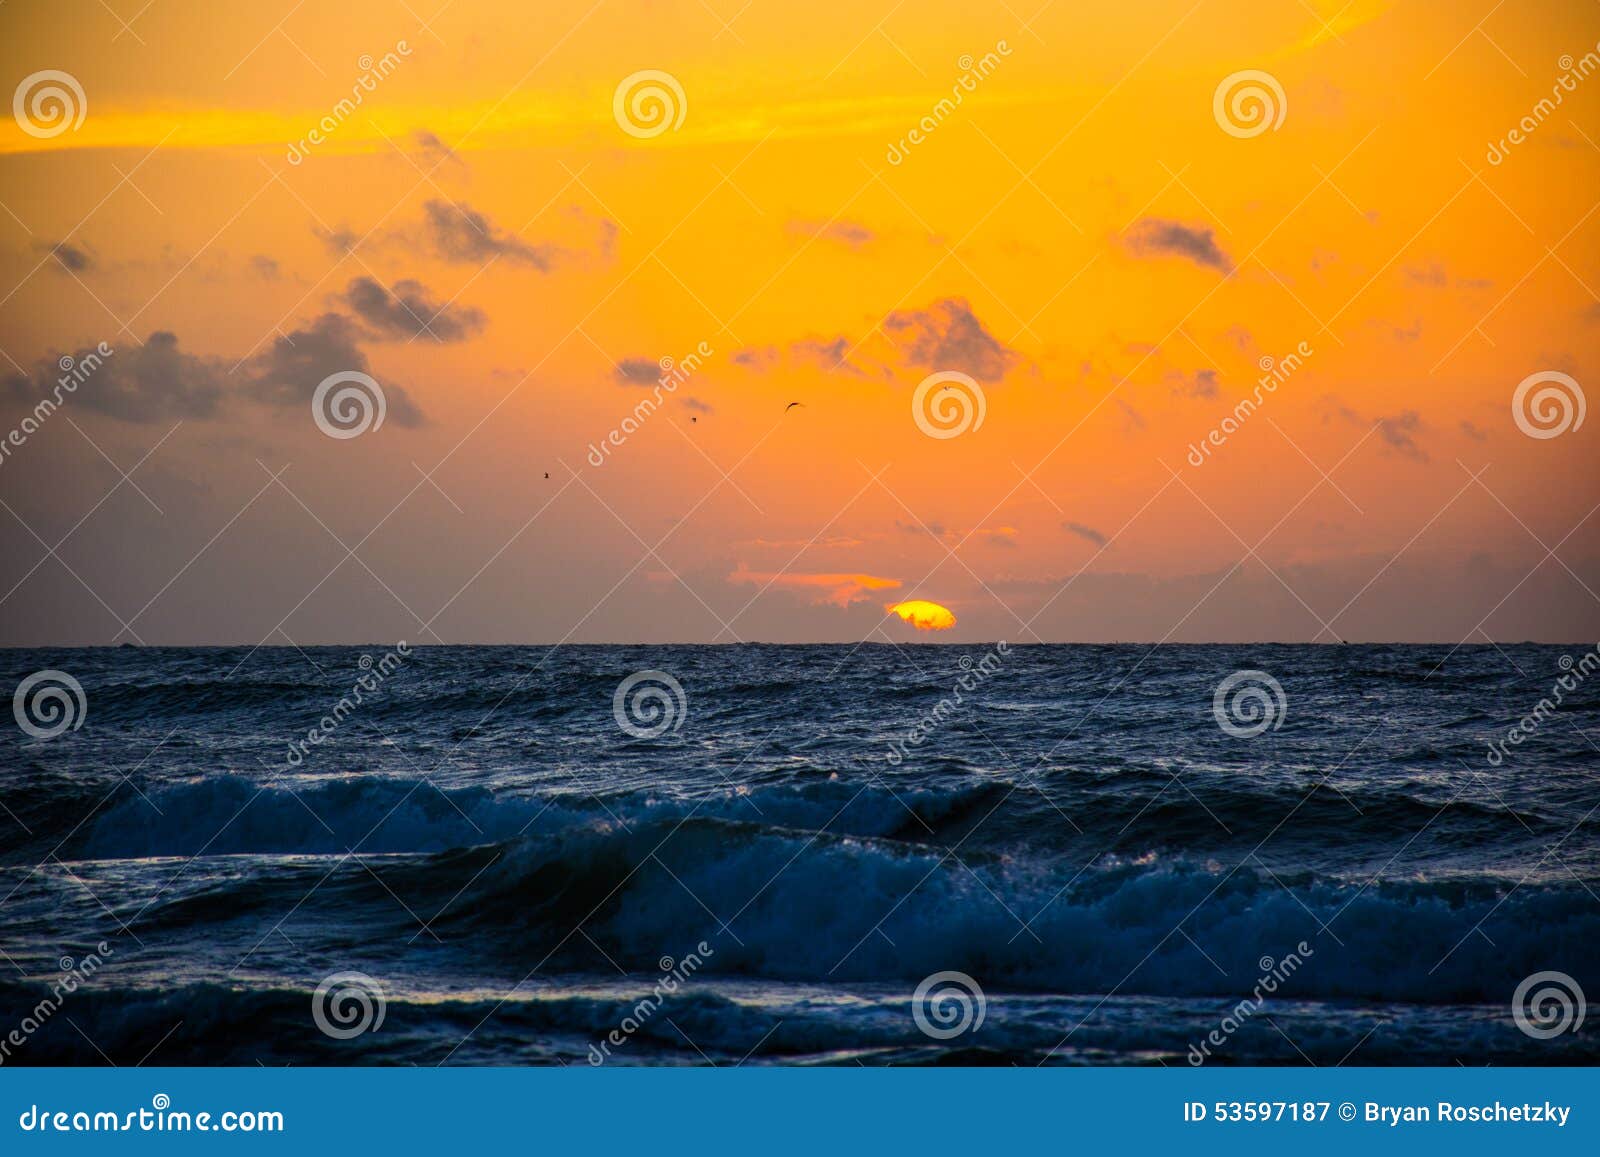 sunrise over the ocean padre island texas waves crashing